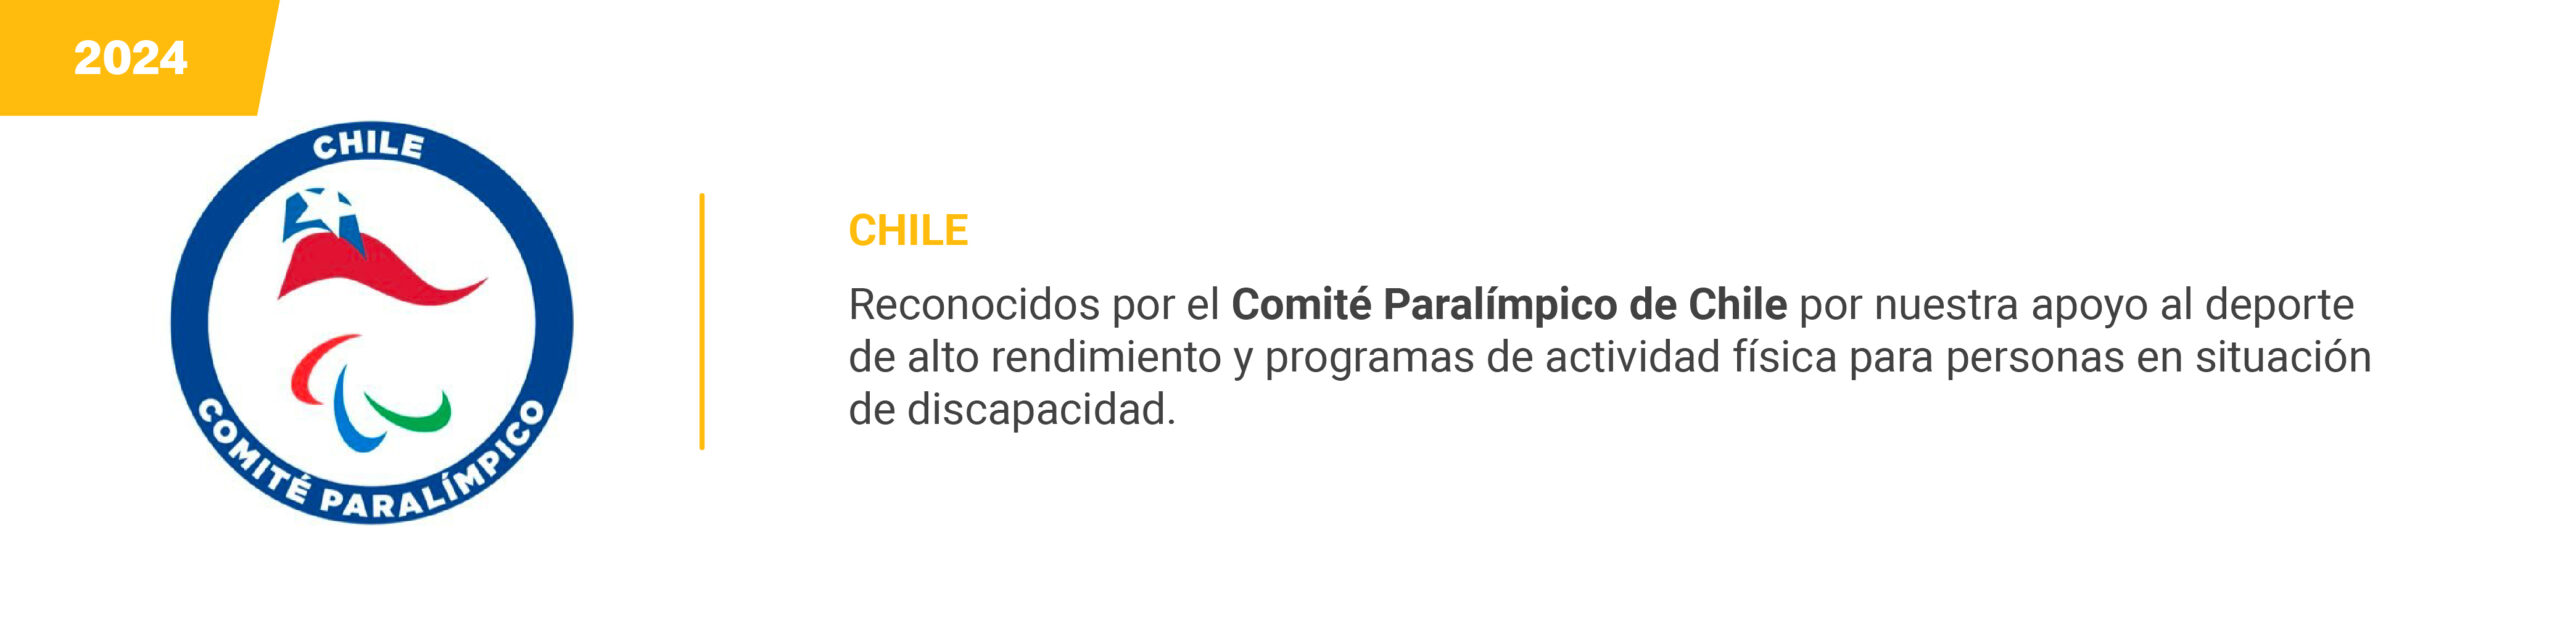 Comite Paralimpico - Chile